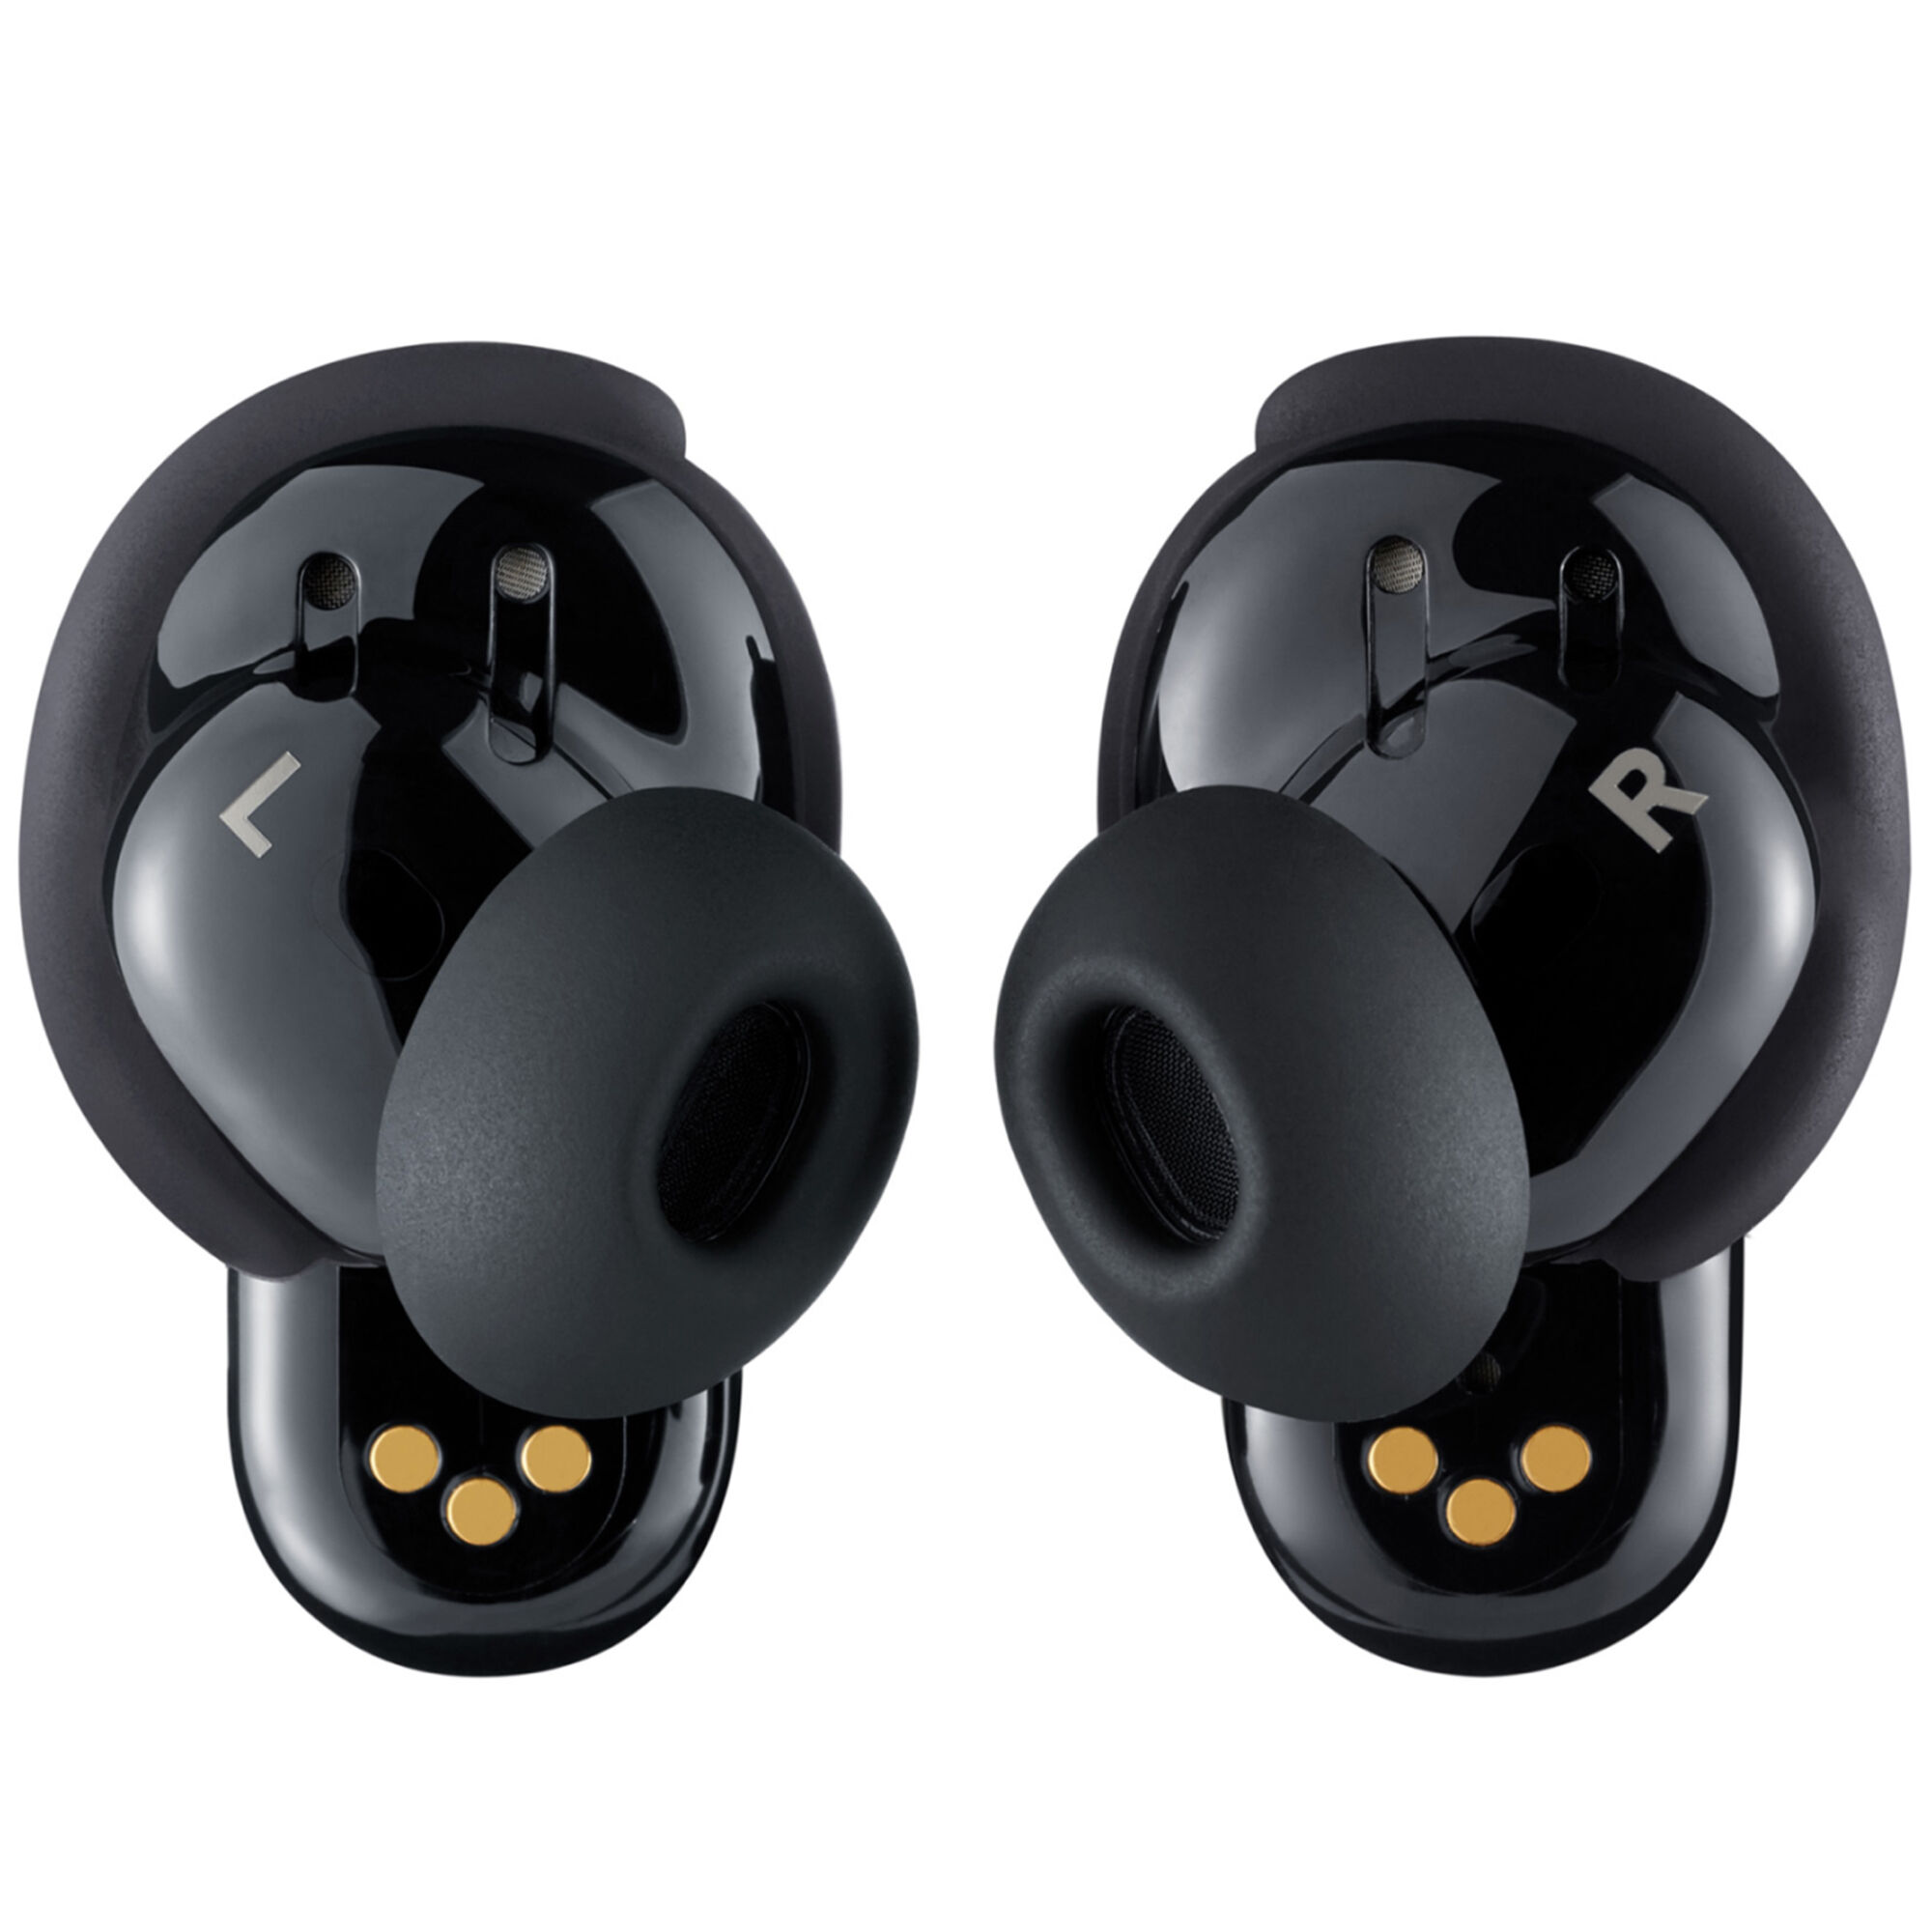 New Bose Quiet Comfort Ultra Earbuds - Black | P.C. Richard u0026 Son